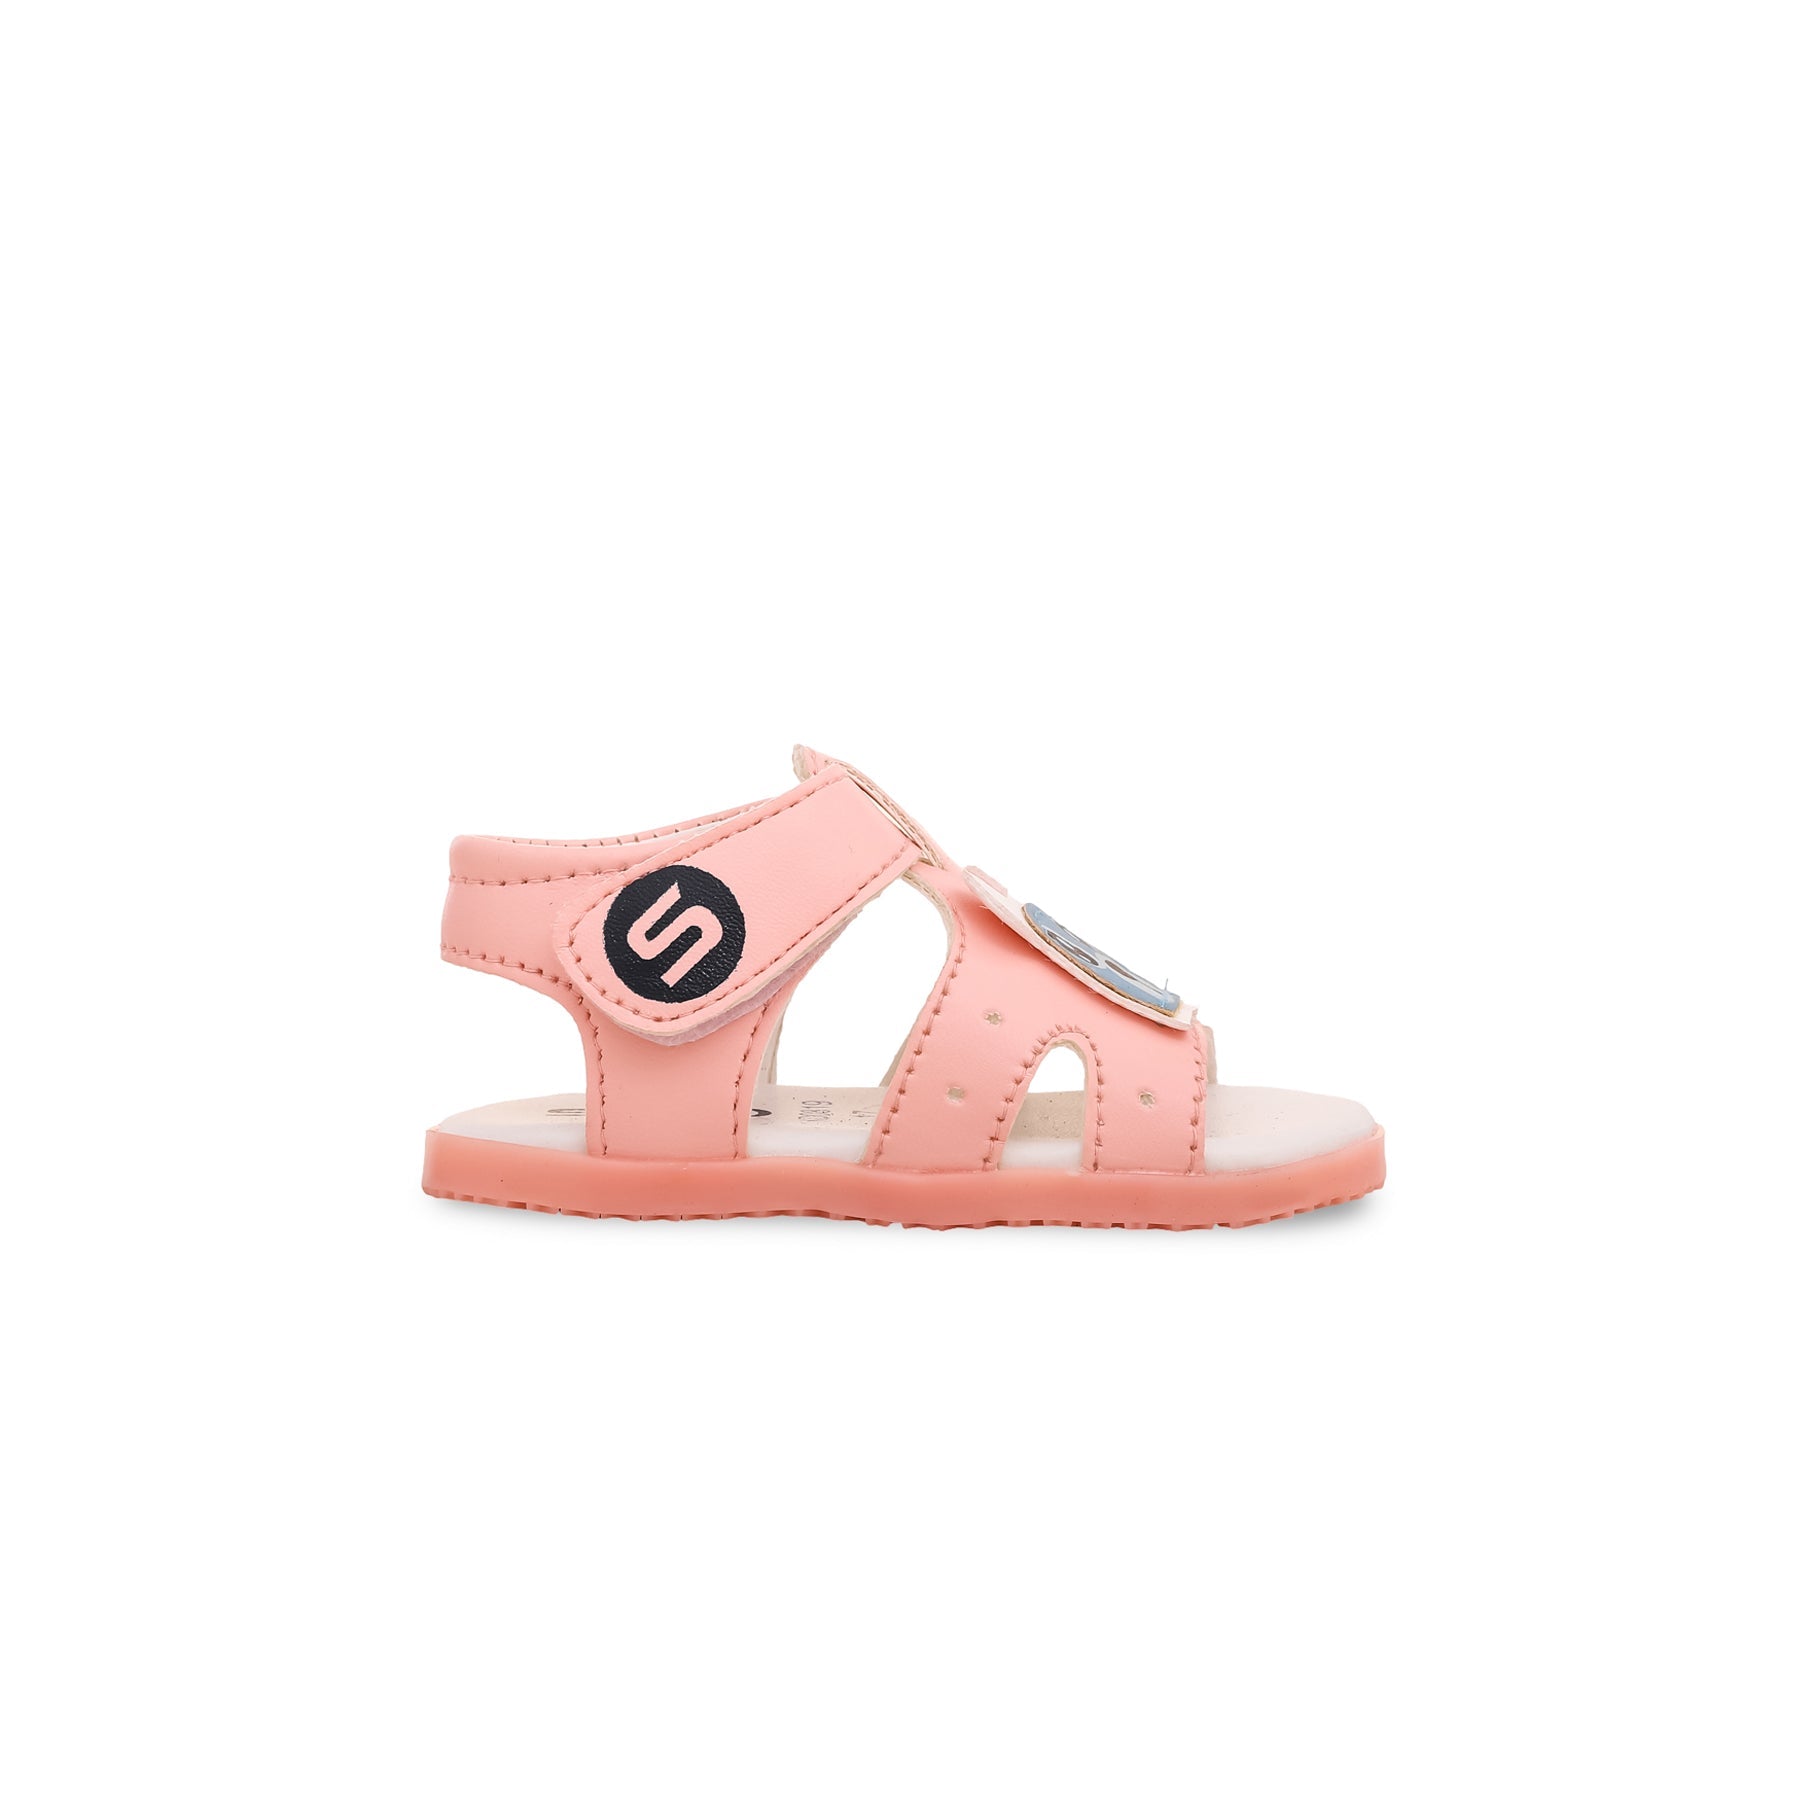 Babies Pink Casual Sandal KD0819